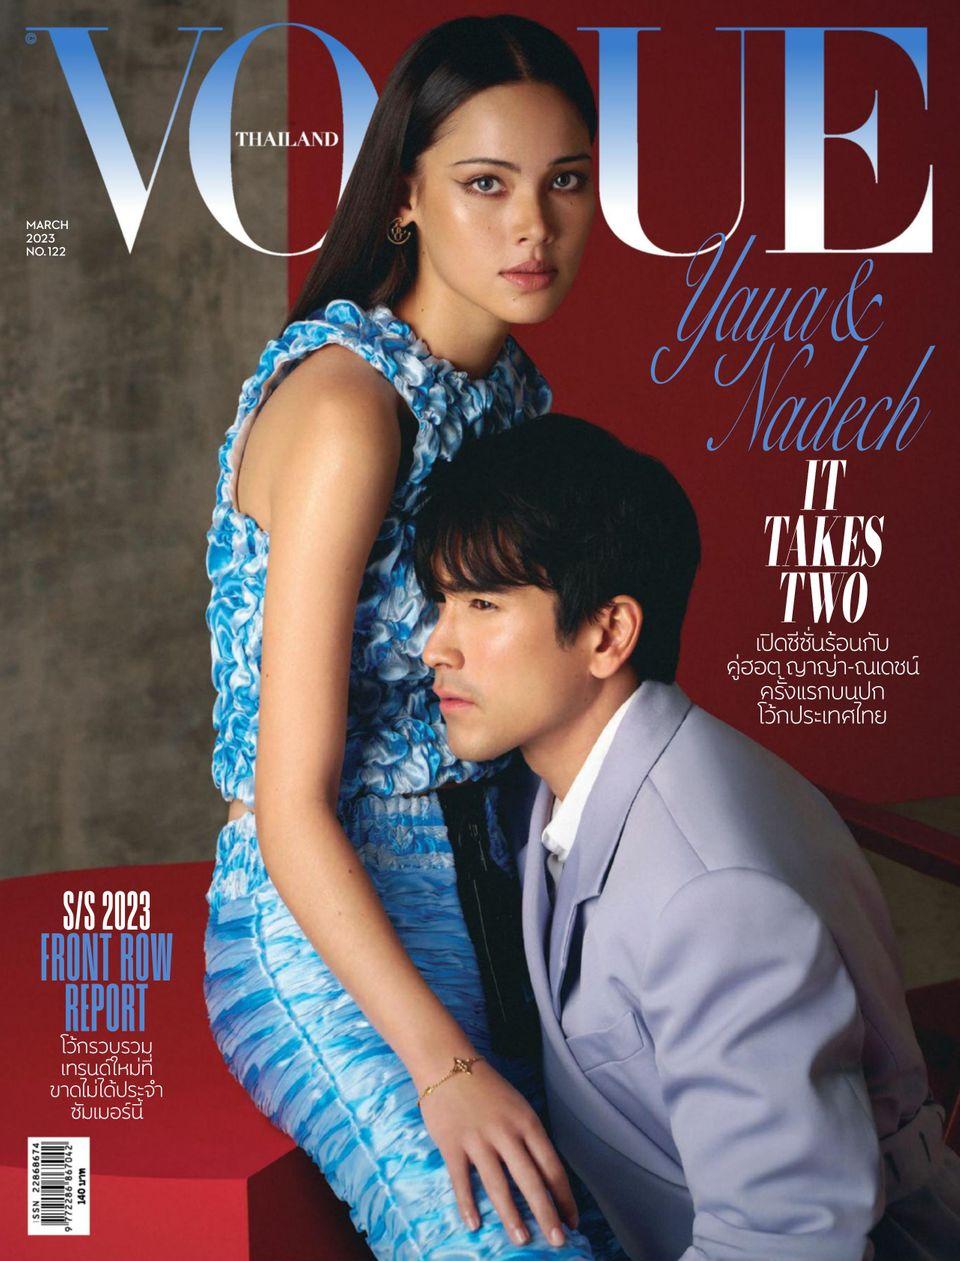 Vogue Thailand March 2022 TayNew テーニュー